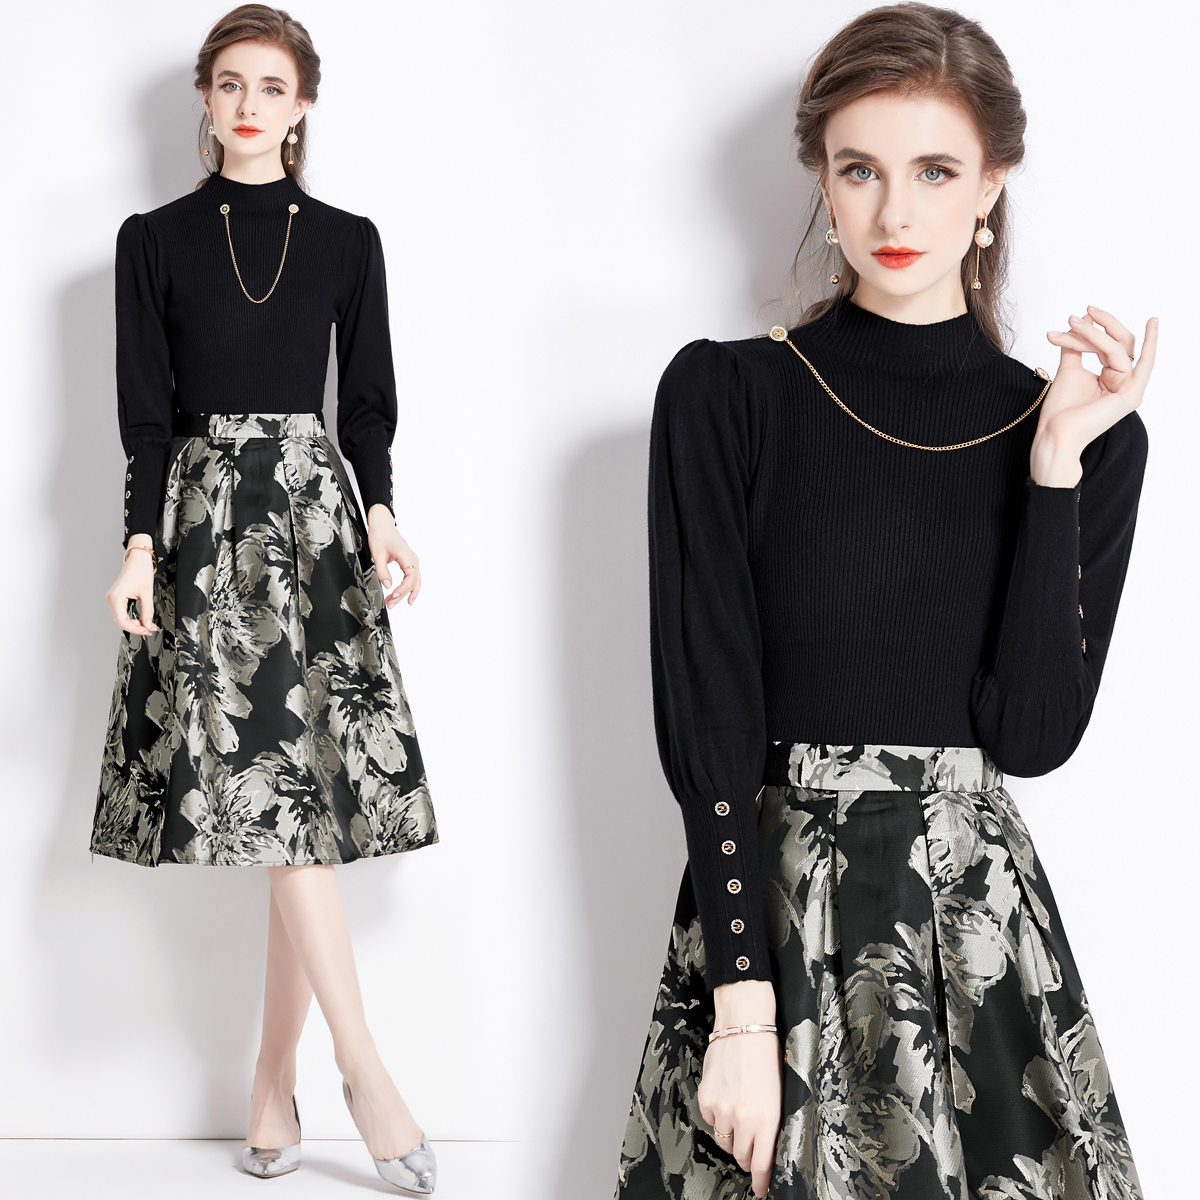 Hepburn style autumn sweater retro slim skirt 2pcs set